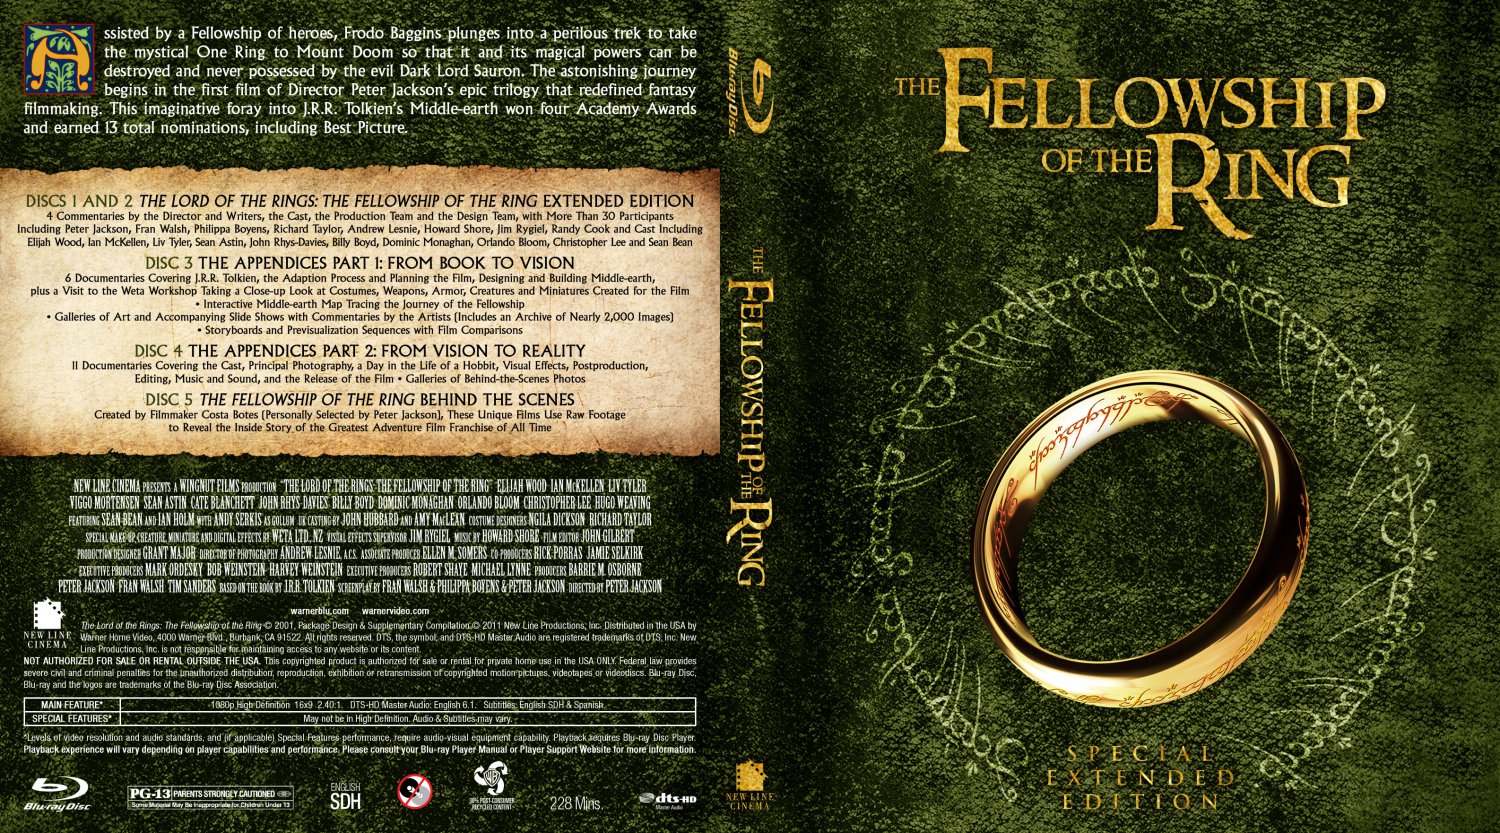 Властелин колец аудио. Fellowship of the Ring обложка. Властелин колец братство кольца обложка DVD. Властелин колец: братство кольца (2001) - обложки.